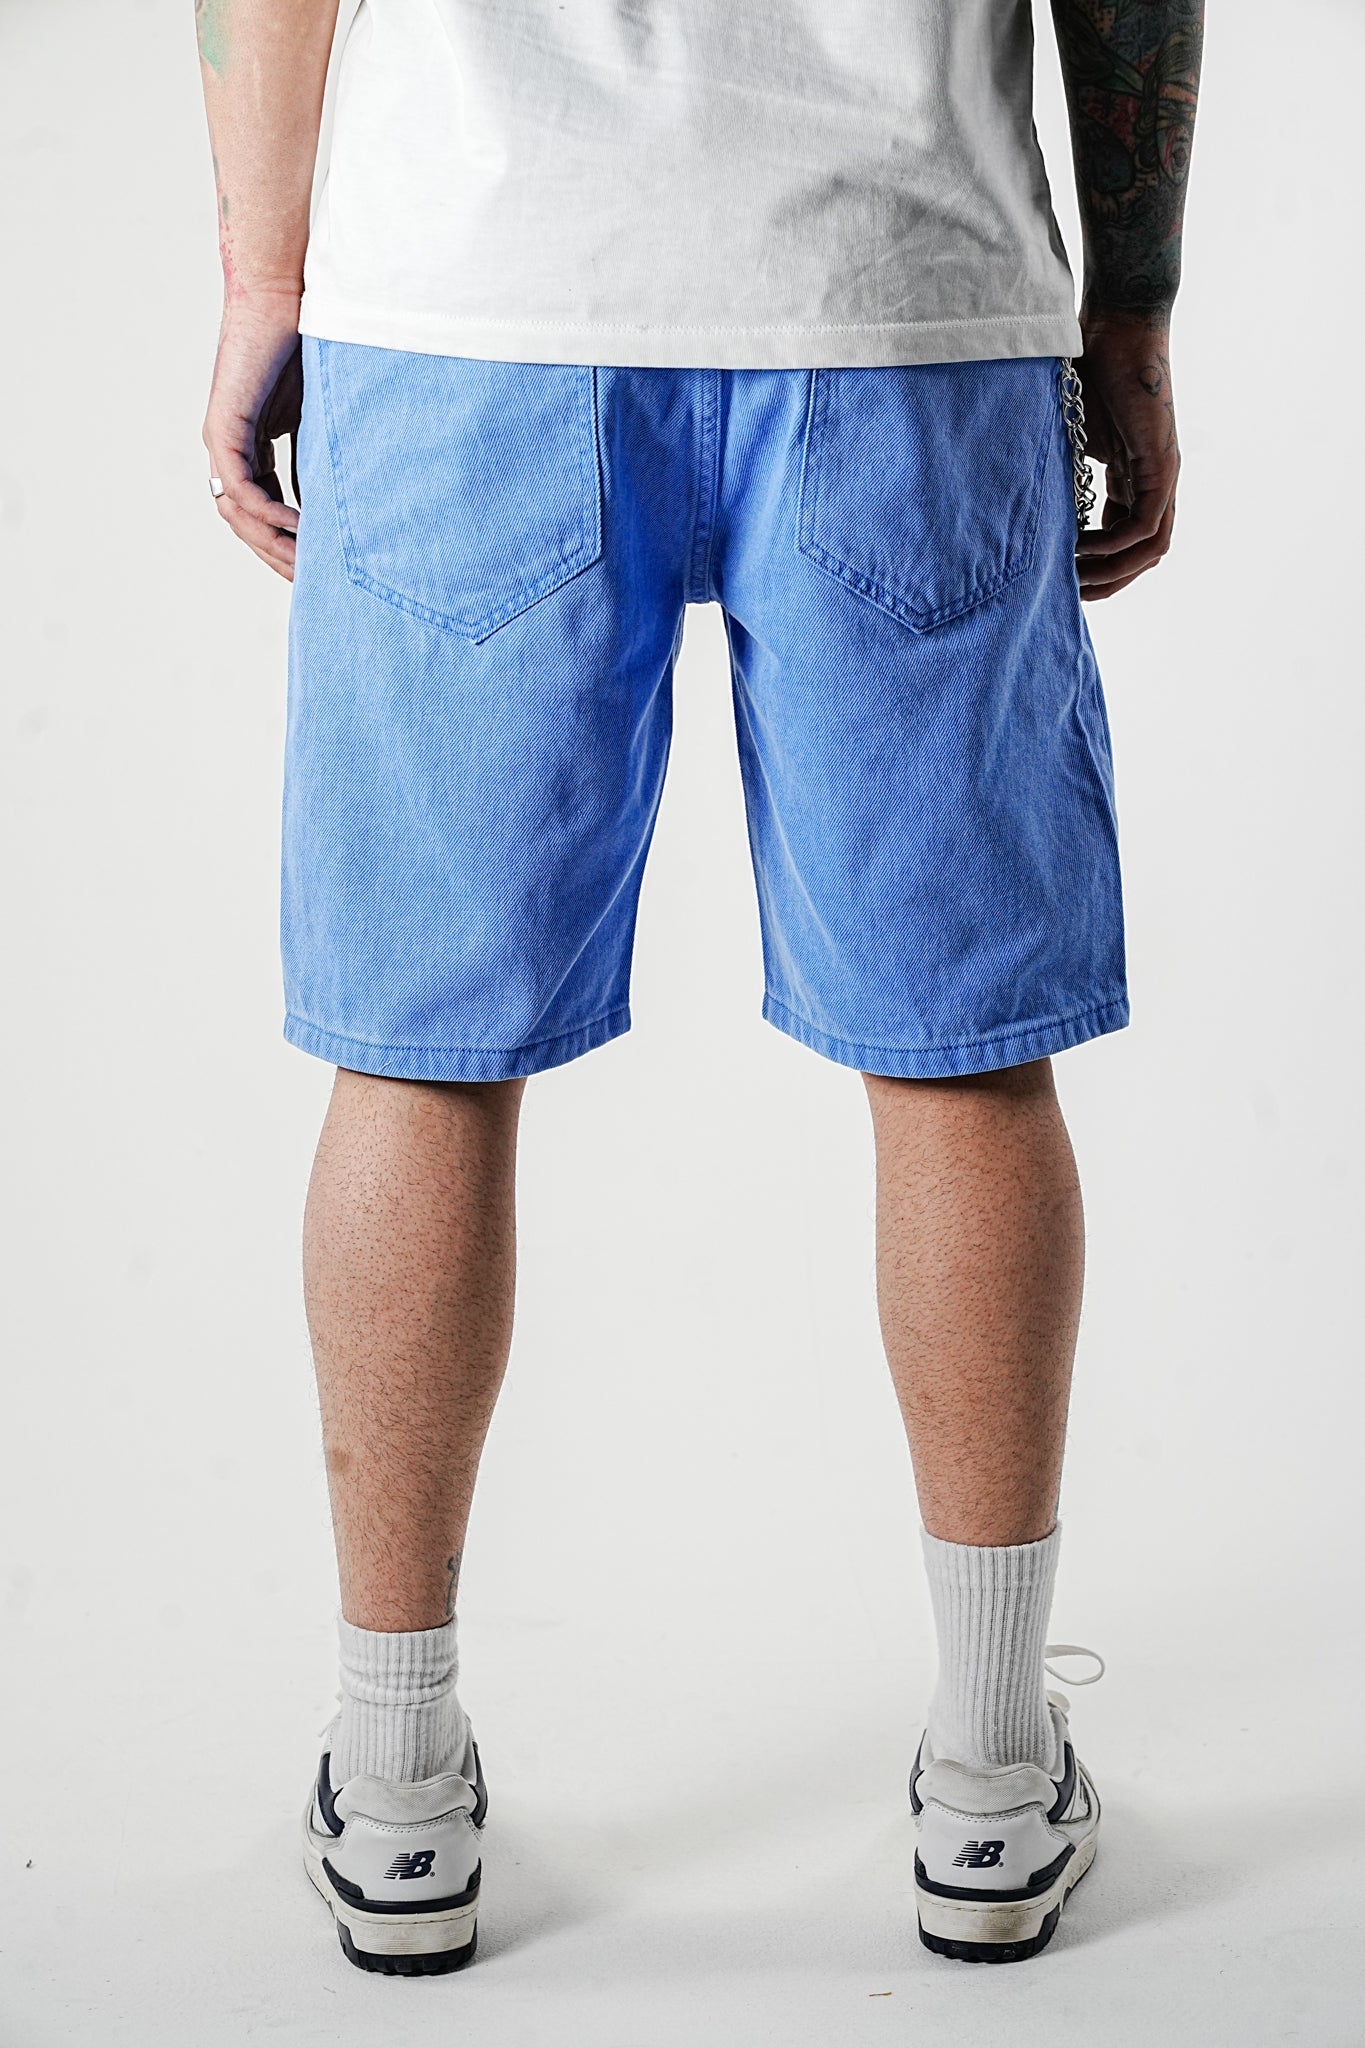 Premium Basic Blue Denim Shorts - UNEFFECTED STUDIOS® - Shorts - UNEFFECTED STUDIOS®